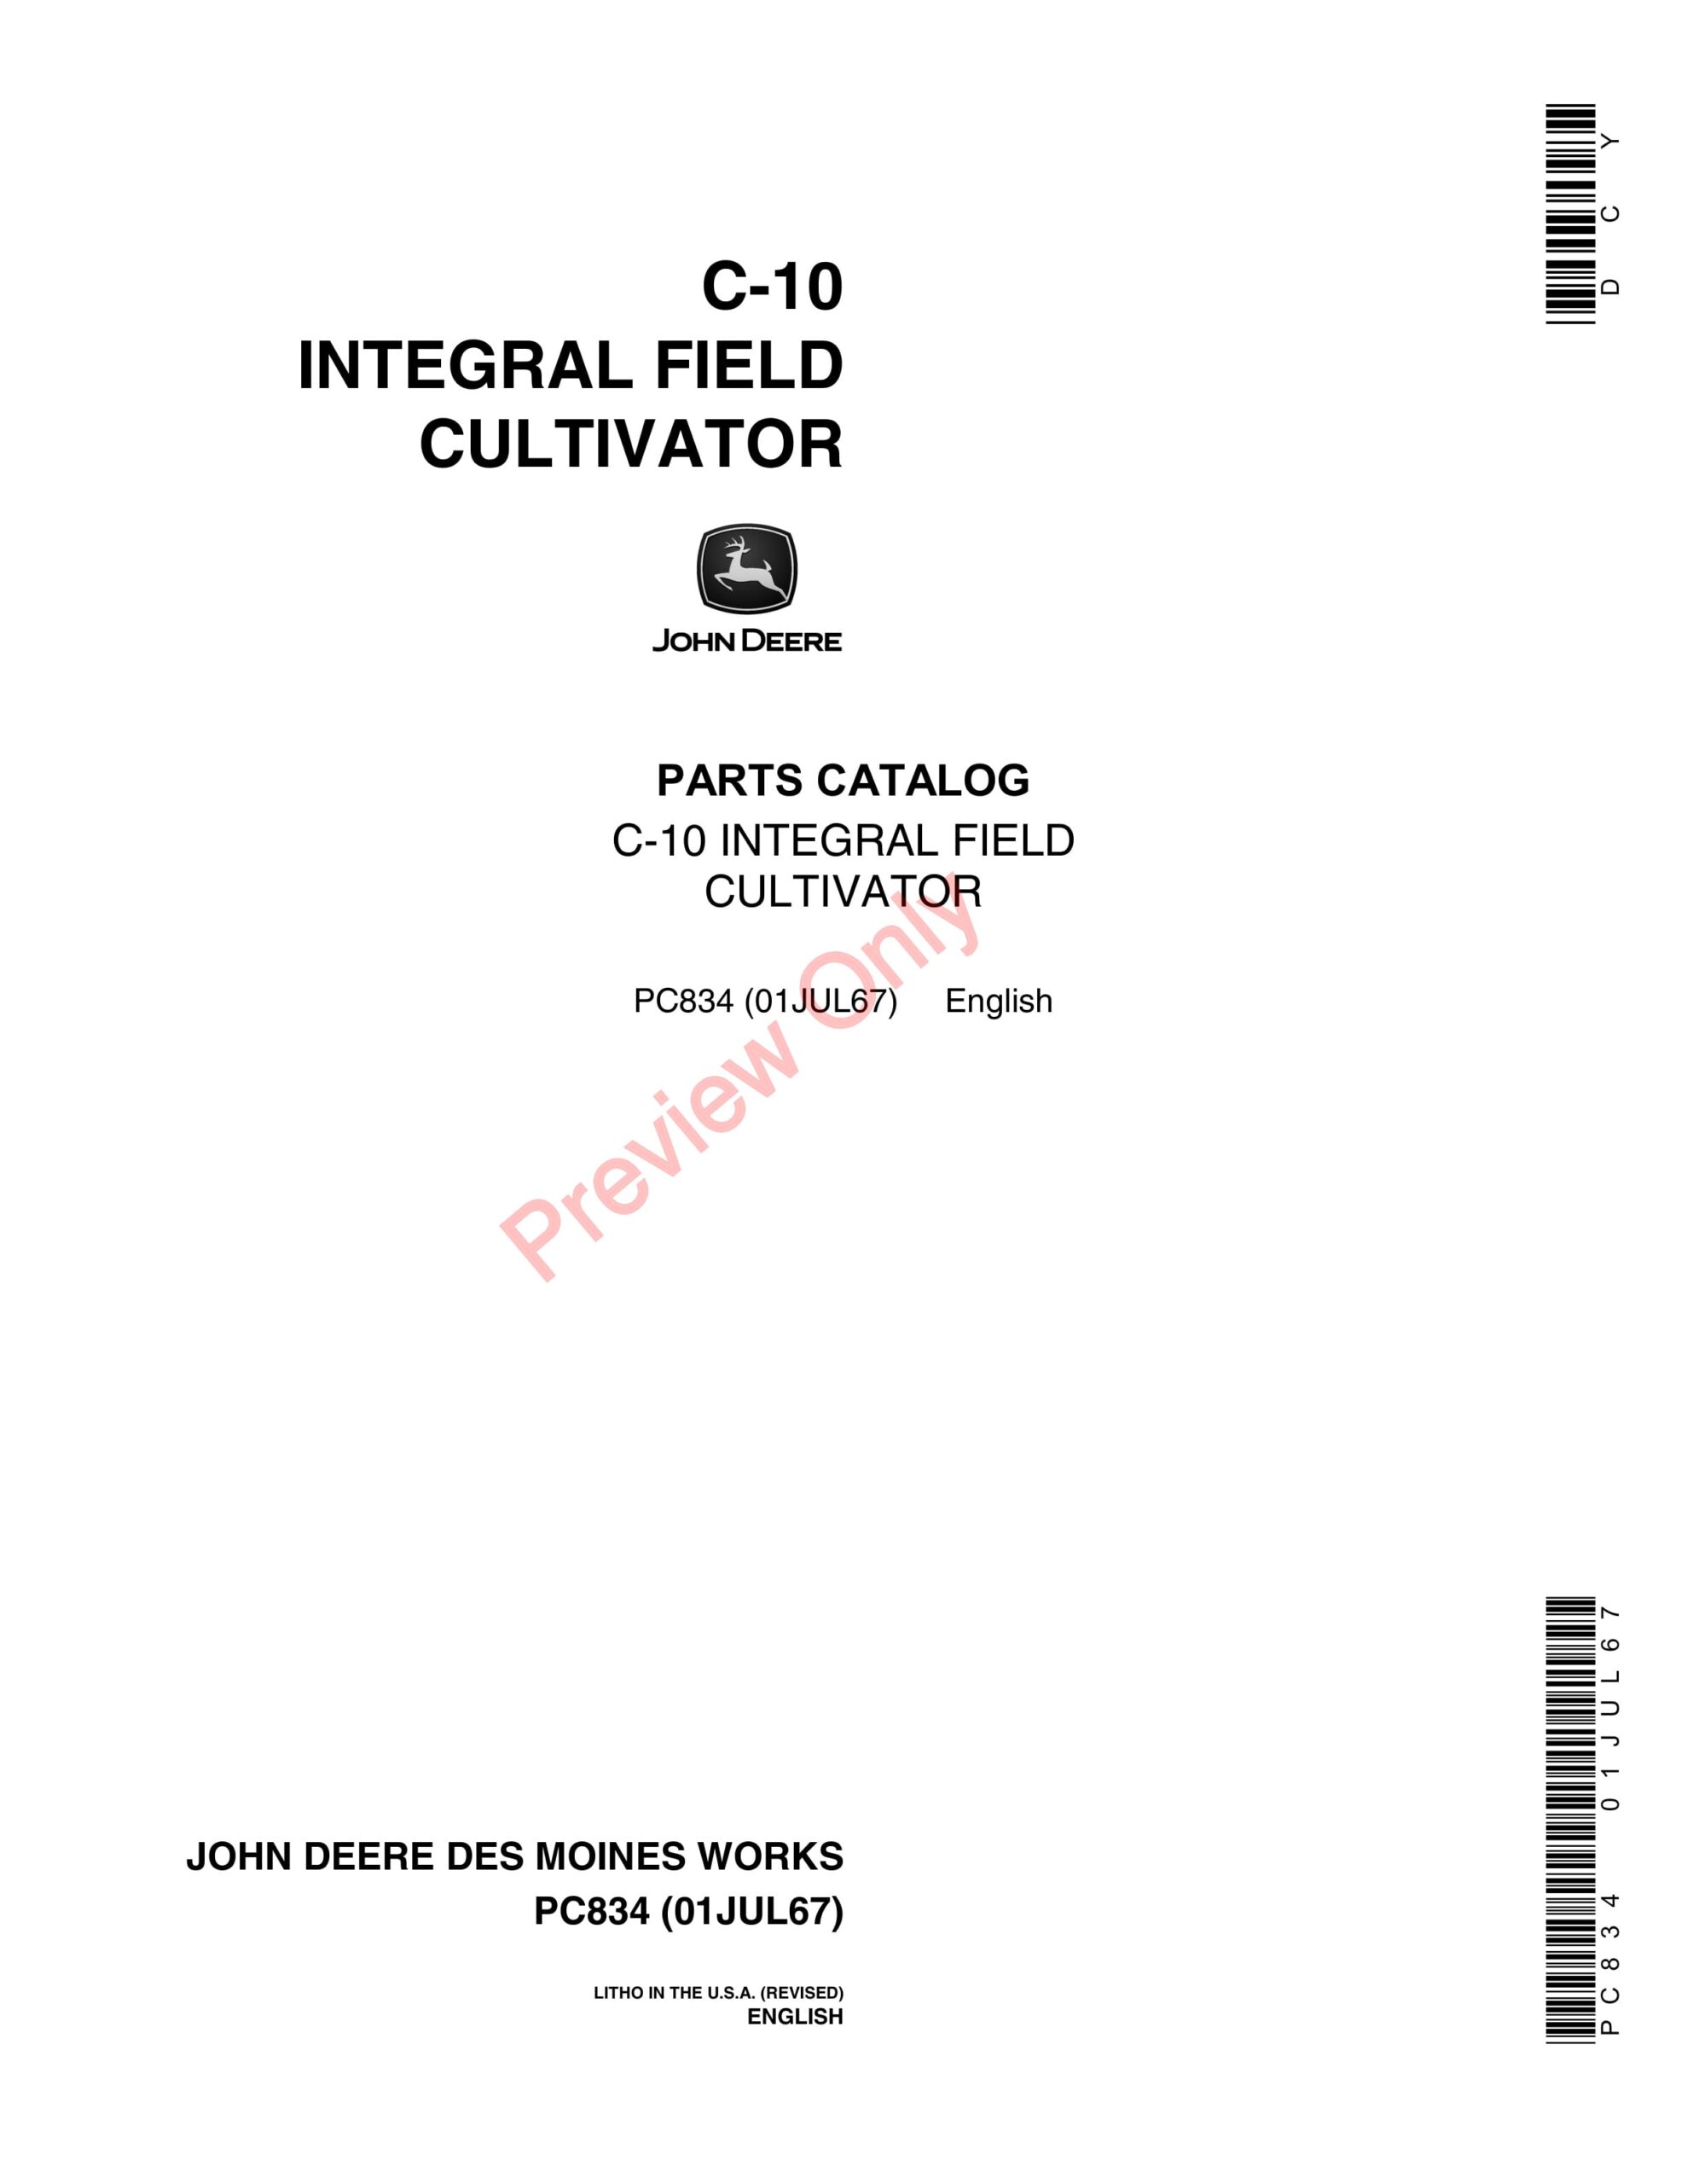 John Deere C-10 Integral Field Cultivator Parts Catalog PC834 01JUL67-1